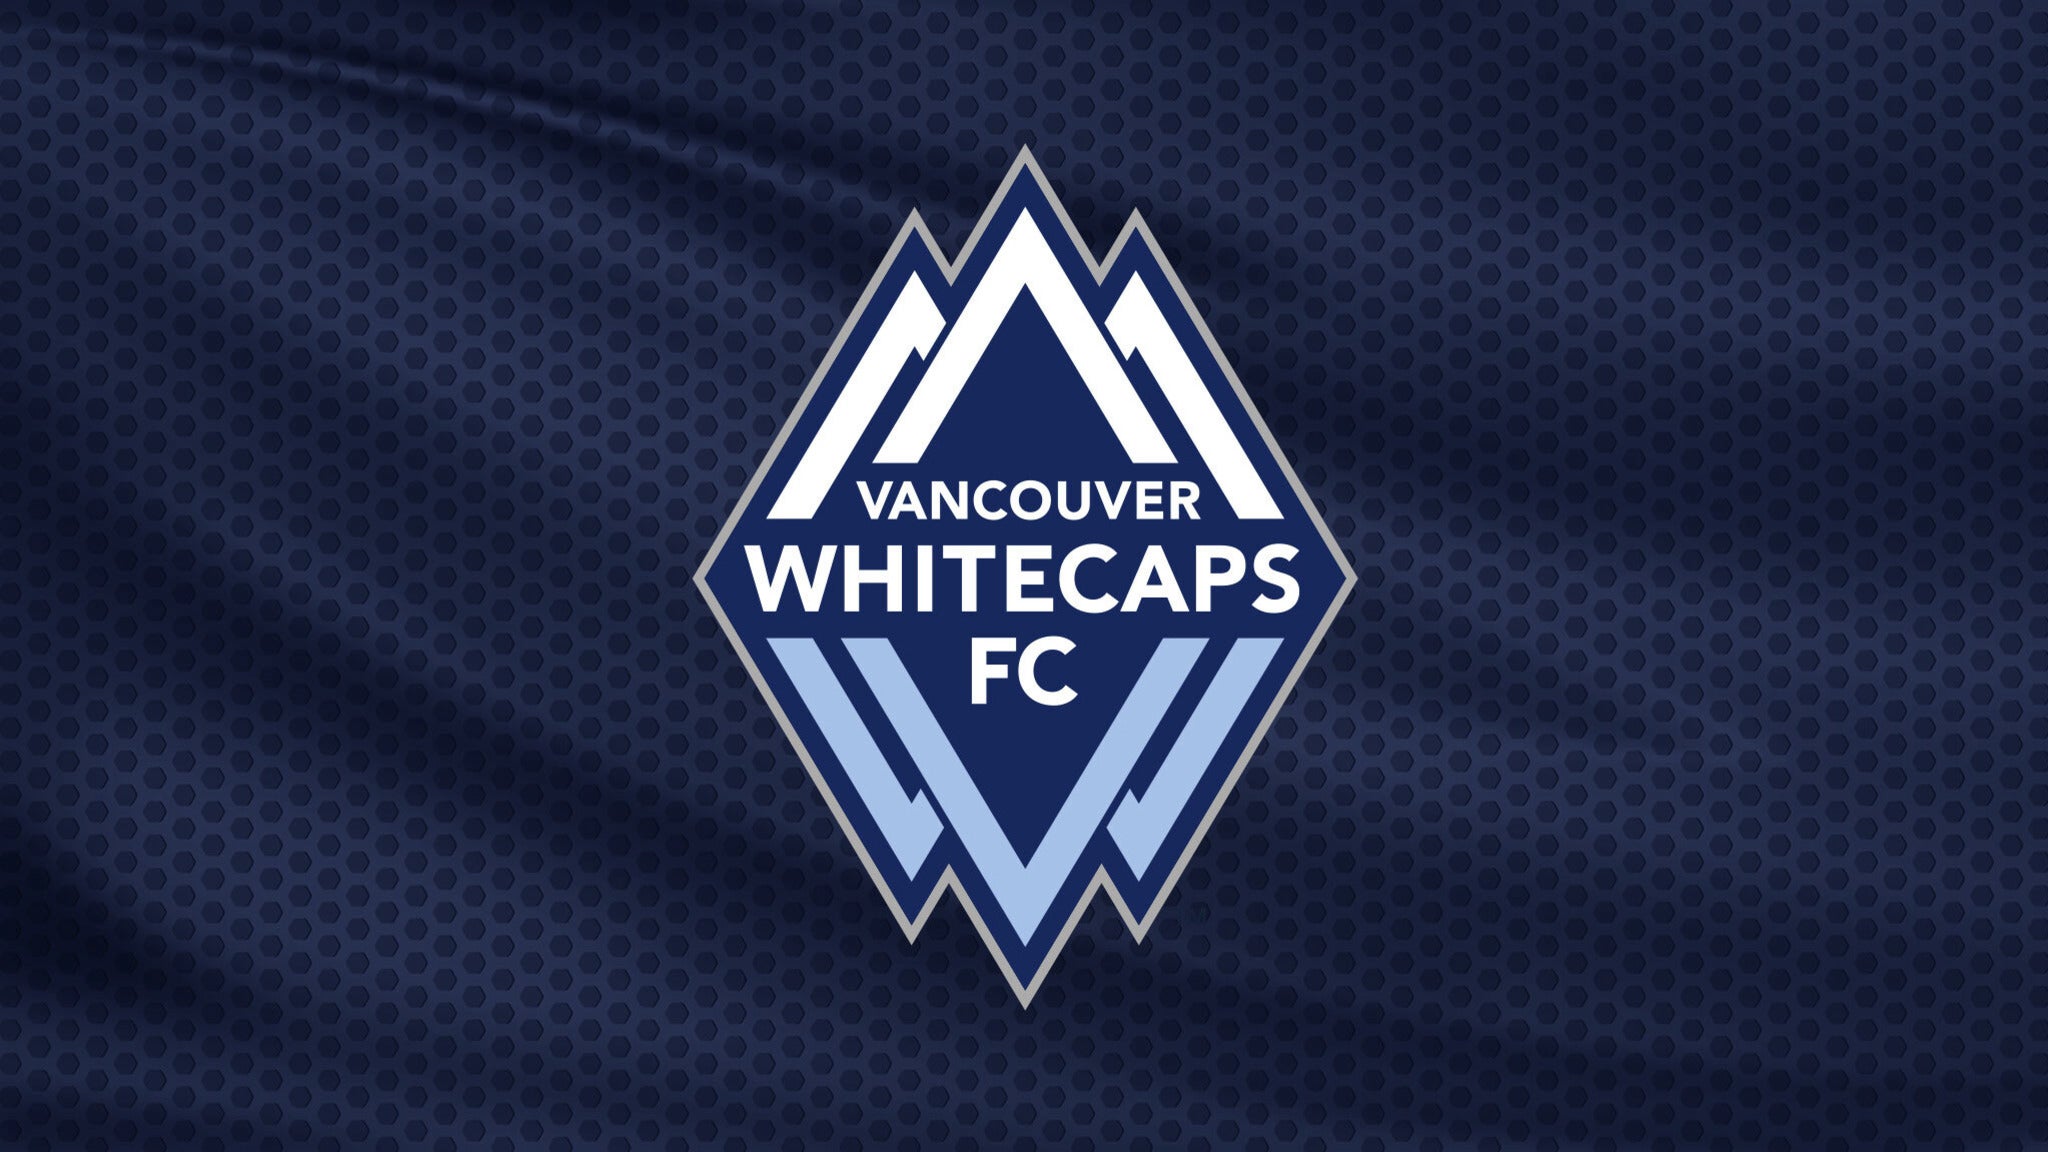 Vancouver Whitecaps FC vs. San Jose Earthquakes in Vancouver promo photo for Vancouver Whitecaps FC Exclusive presale offer code